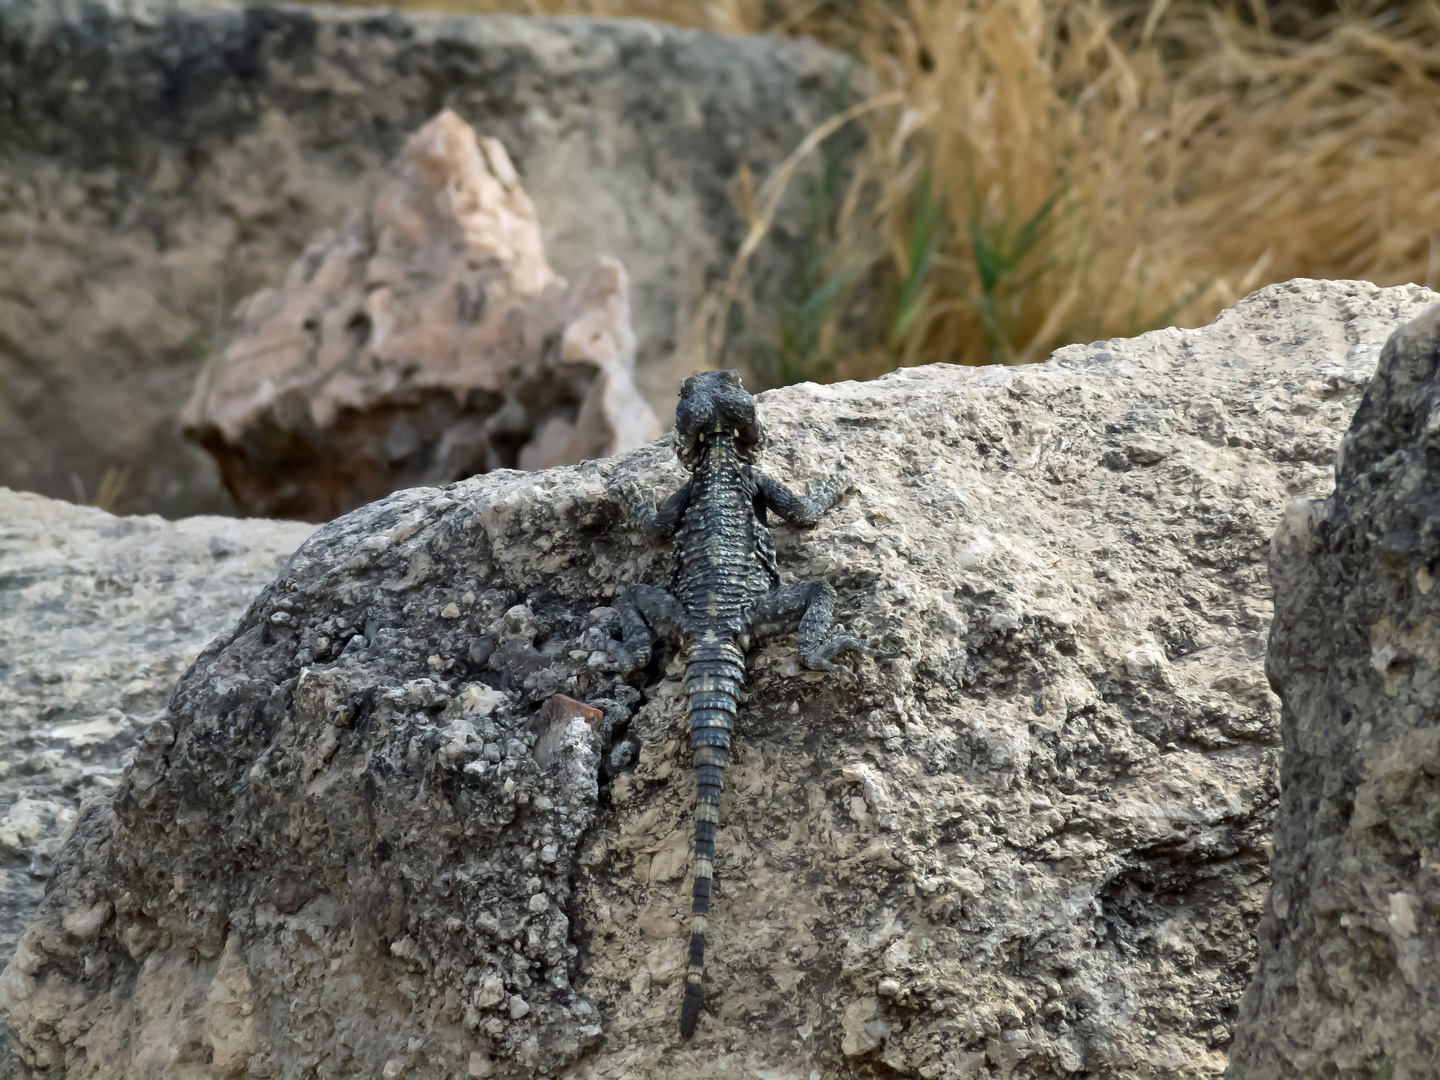 Hardun (Laudakia stellio brachydactyla) in der Negev-Wüste